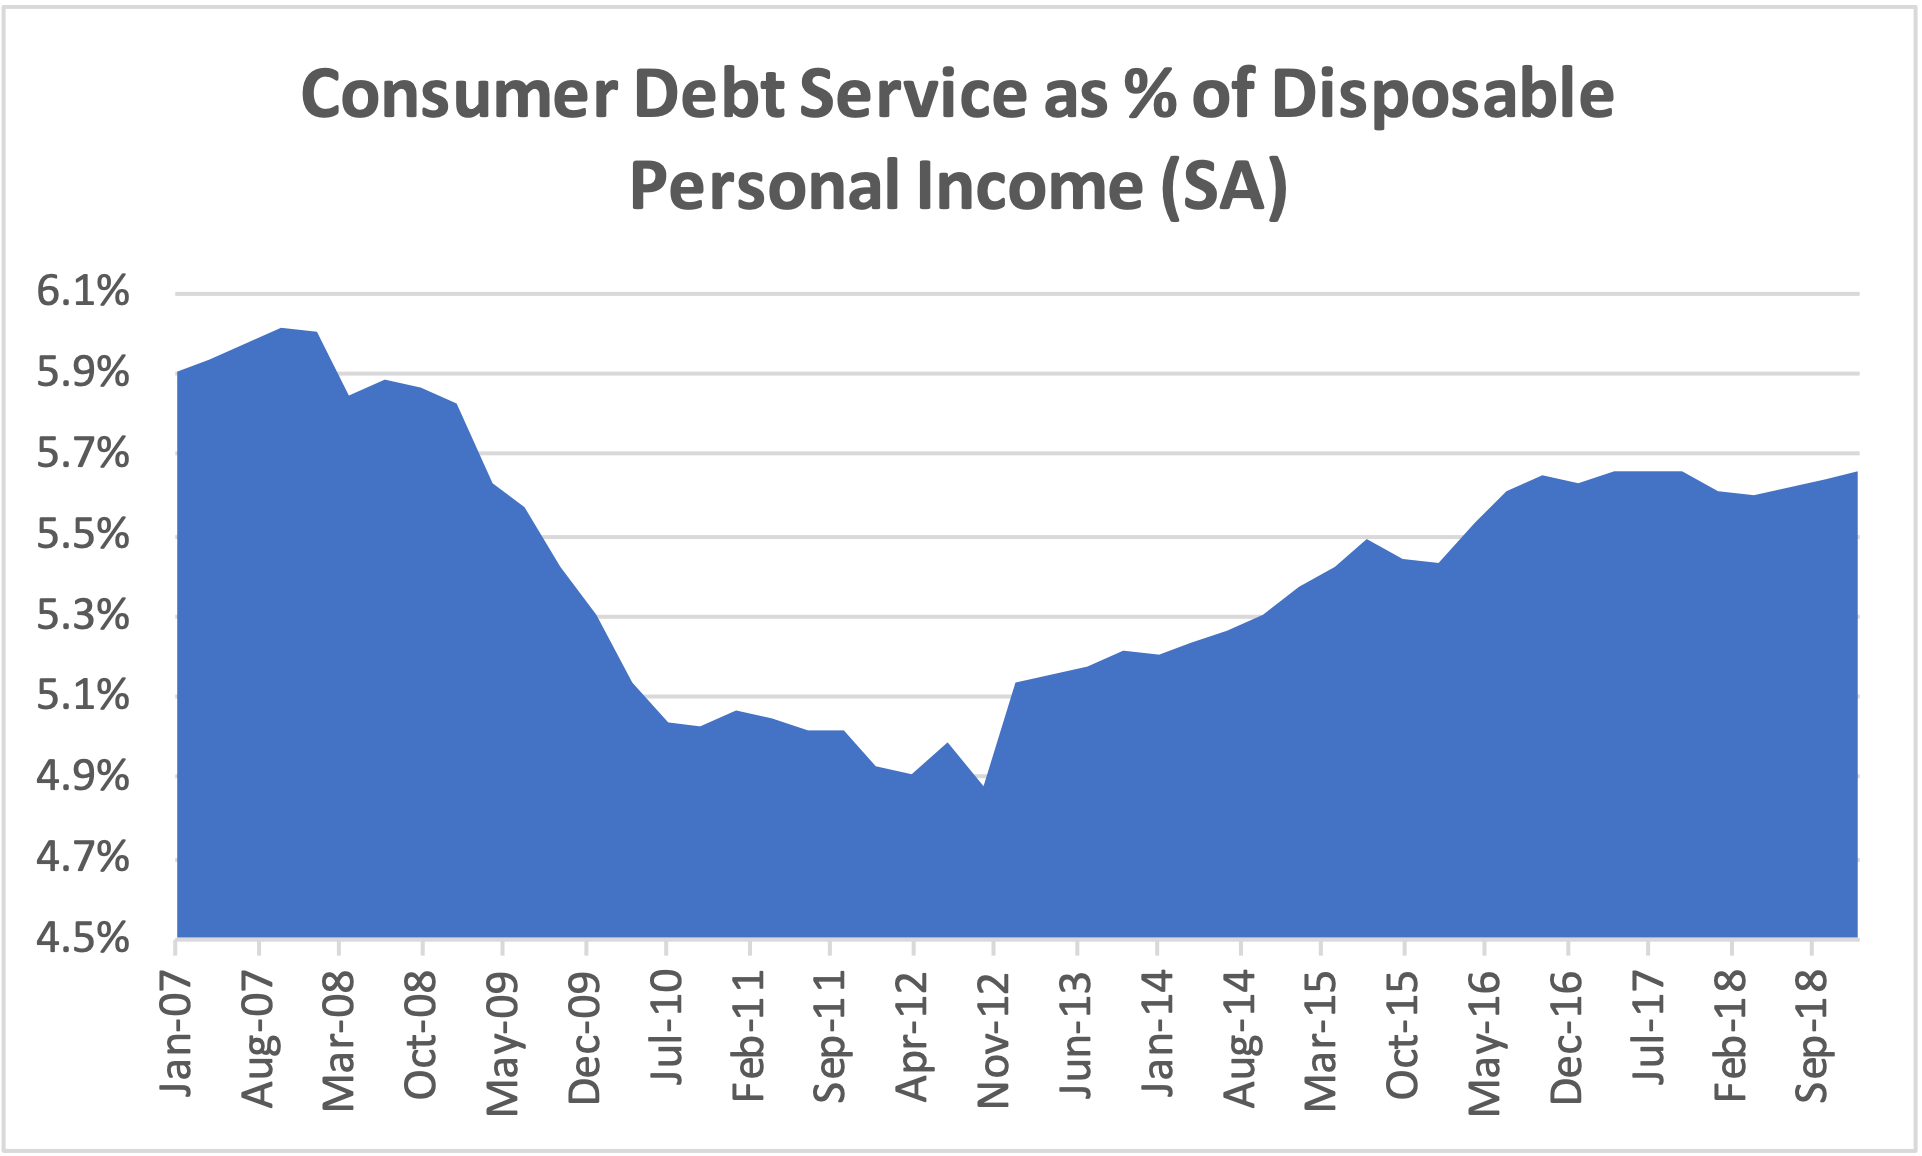 Consumer Debt Service as % of Disposable Personal Income (SA)